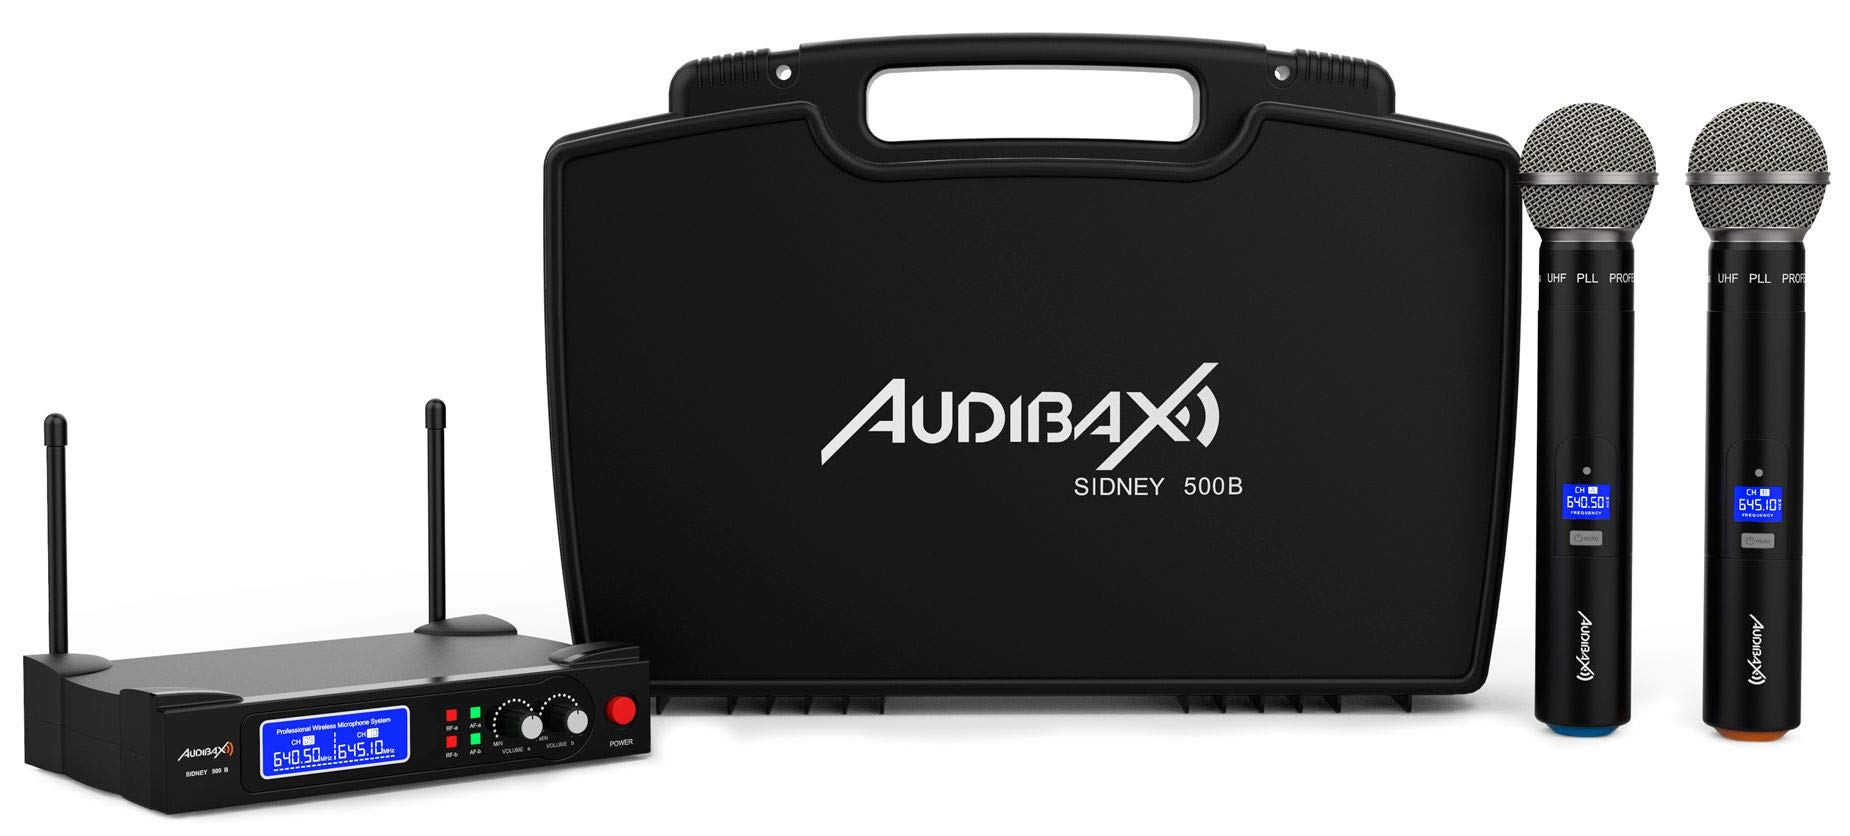 Audibax Sidney 500 B Micrófono Inalámbrico Profesional UHF Doble Mano + Maleta